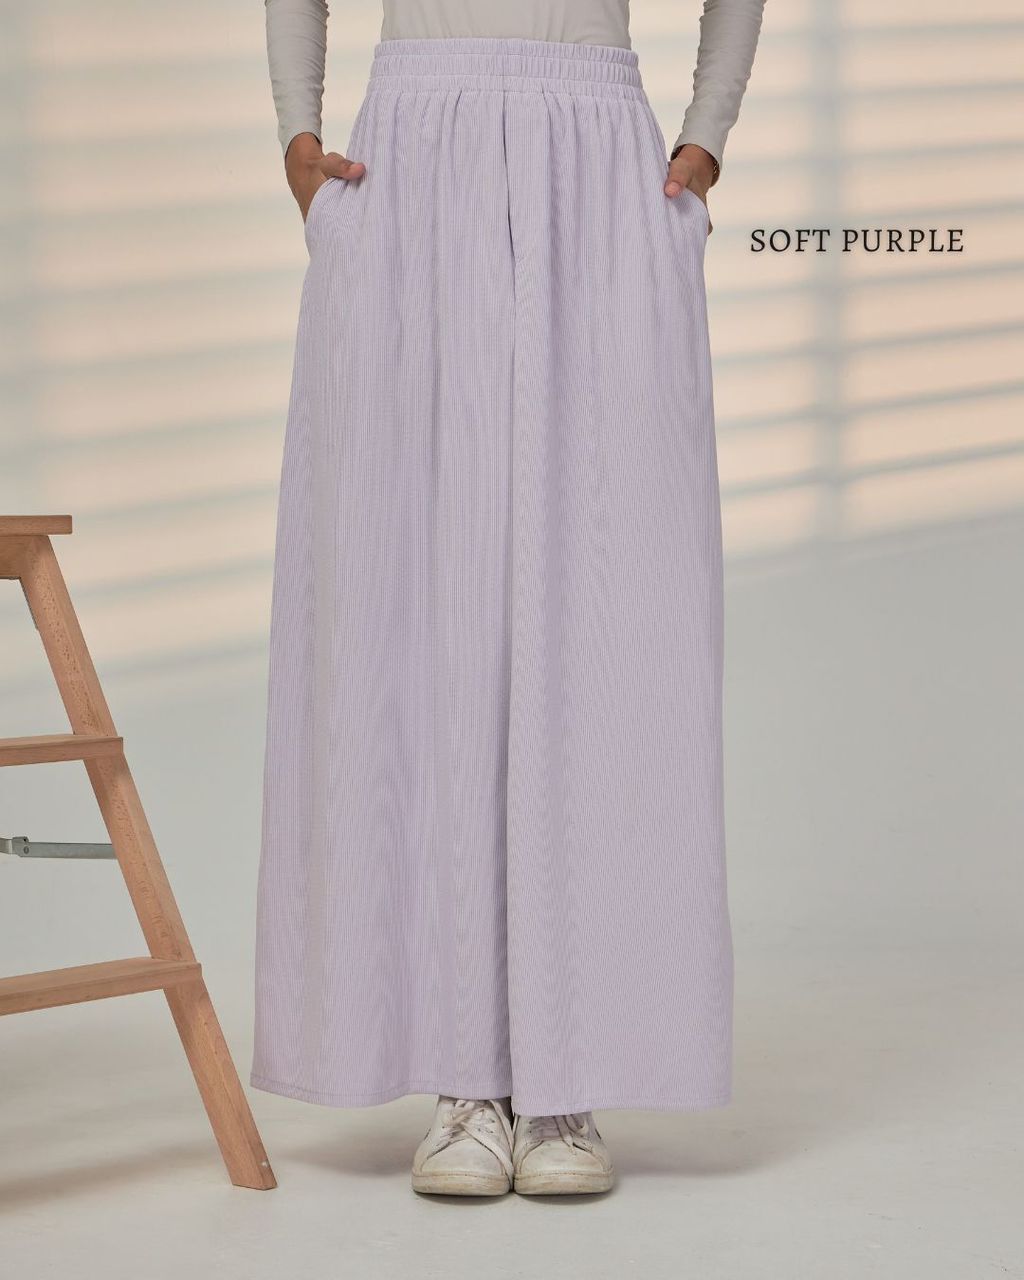 haura-wear-brenda-mix-cotton-skirt-high-waist-cotton-long-pants-seluar-muslimah-seluar-perempuan-palazzo-pants-sluar-skirt (1)